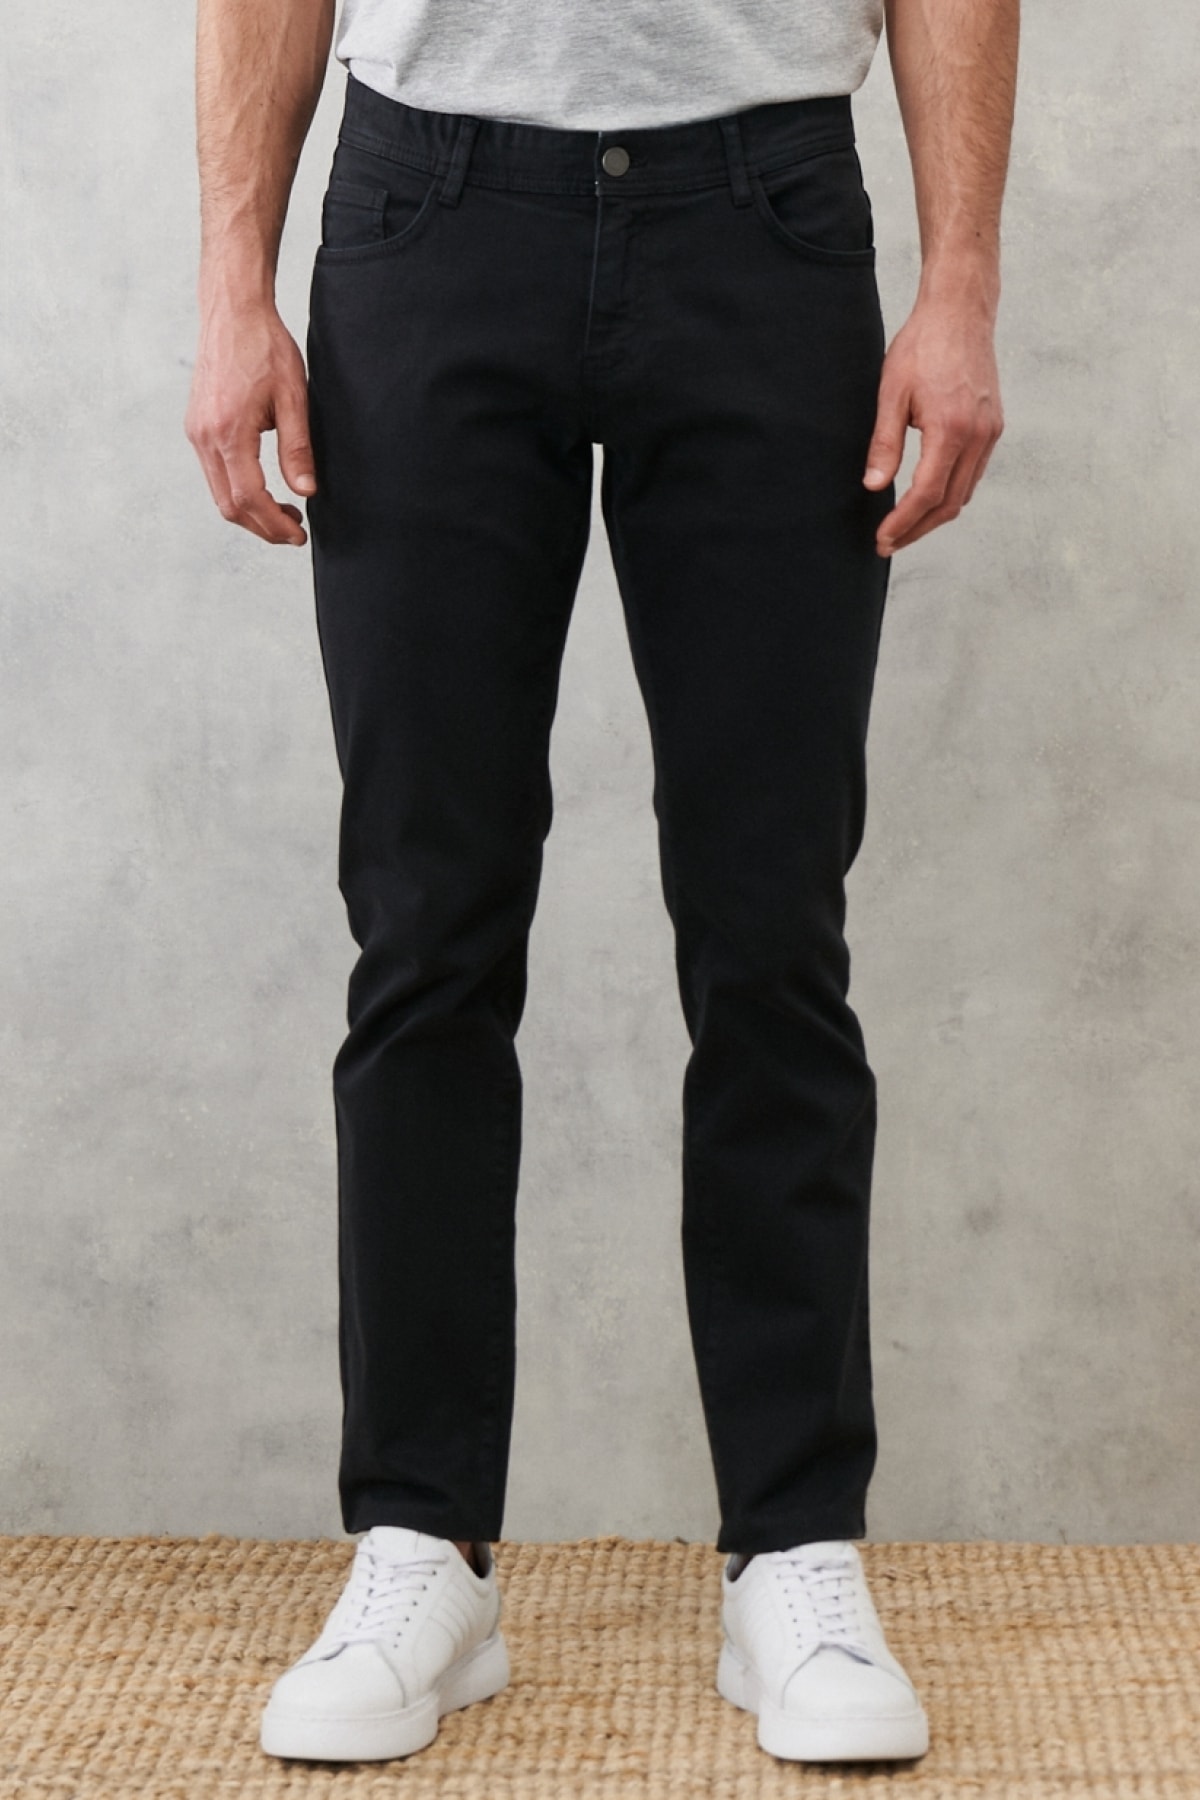 ALTINYILDIZ CLASSICS Men's Black 360 Degree All-Direction Stretch Comfortable Slim Fit Slim Fit Trousers